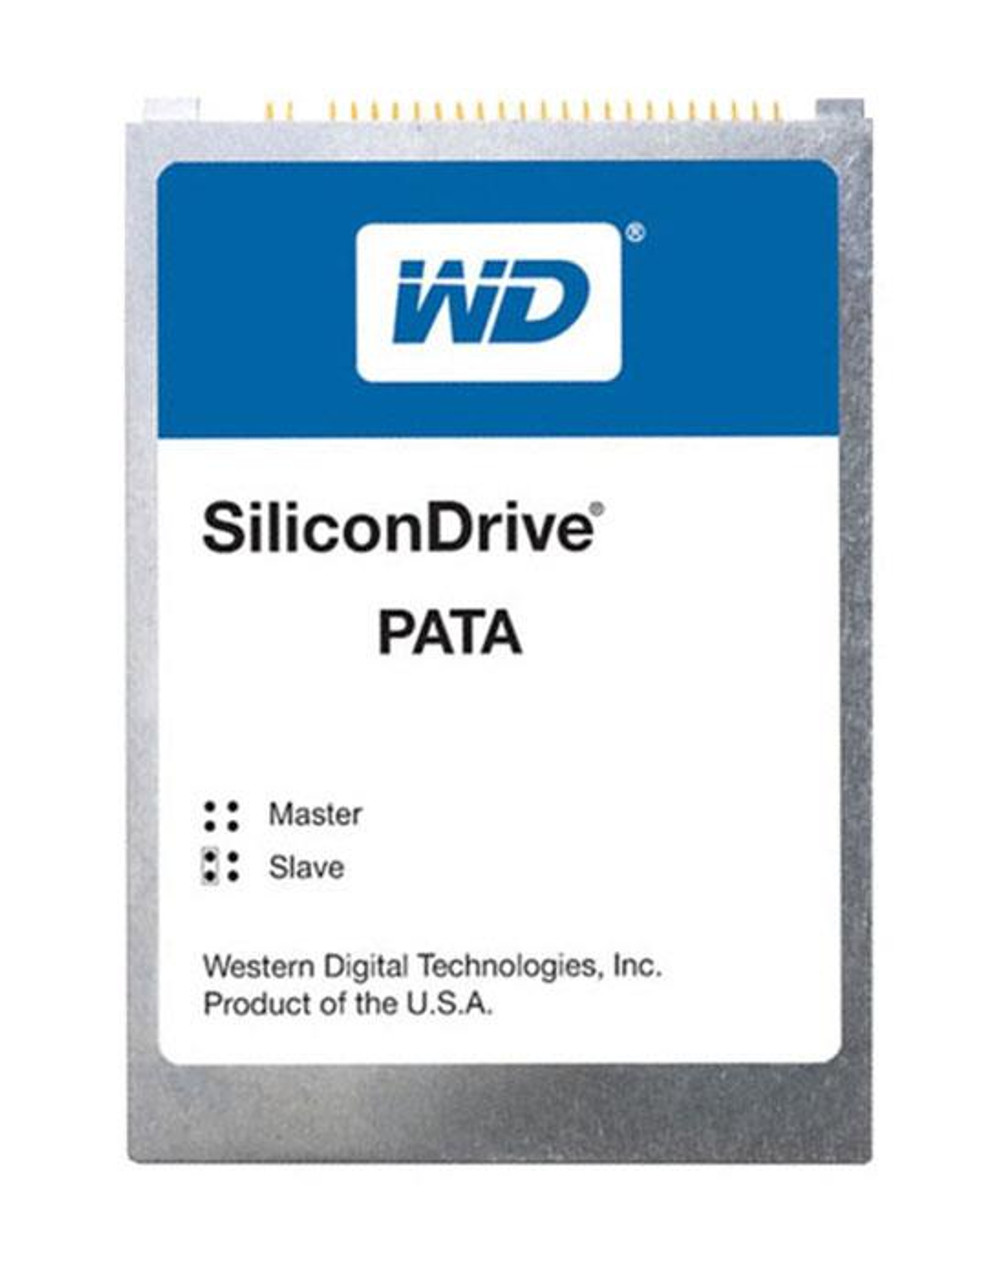 SSD-D02G-3600 Western Digital SiliconDrive 2GB ATA/IDE (PATA) 2.5-inch